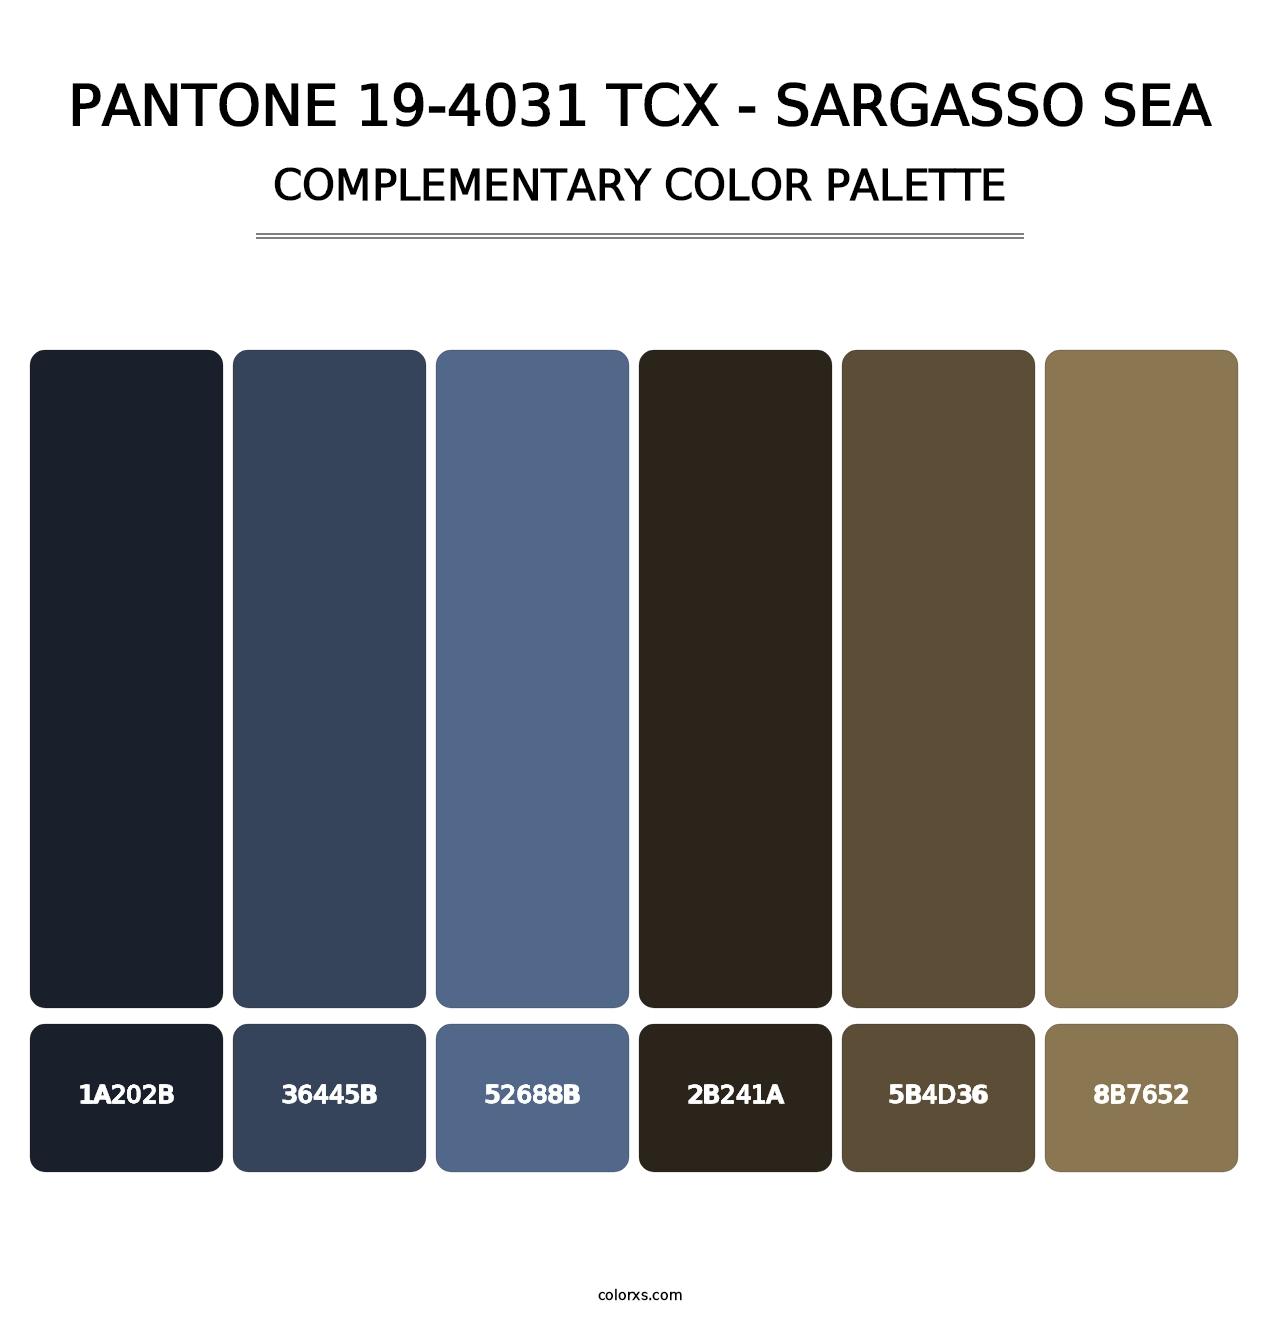 PANTONE 19-4031 TCX - Sargasso Sea - Complementary Color Palette